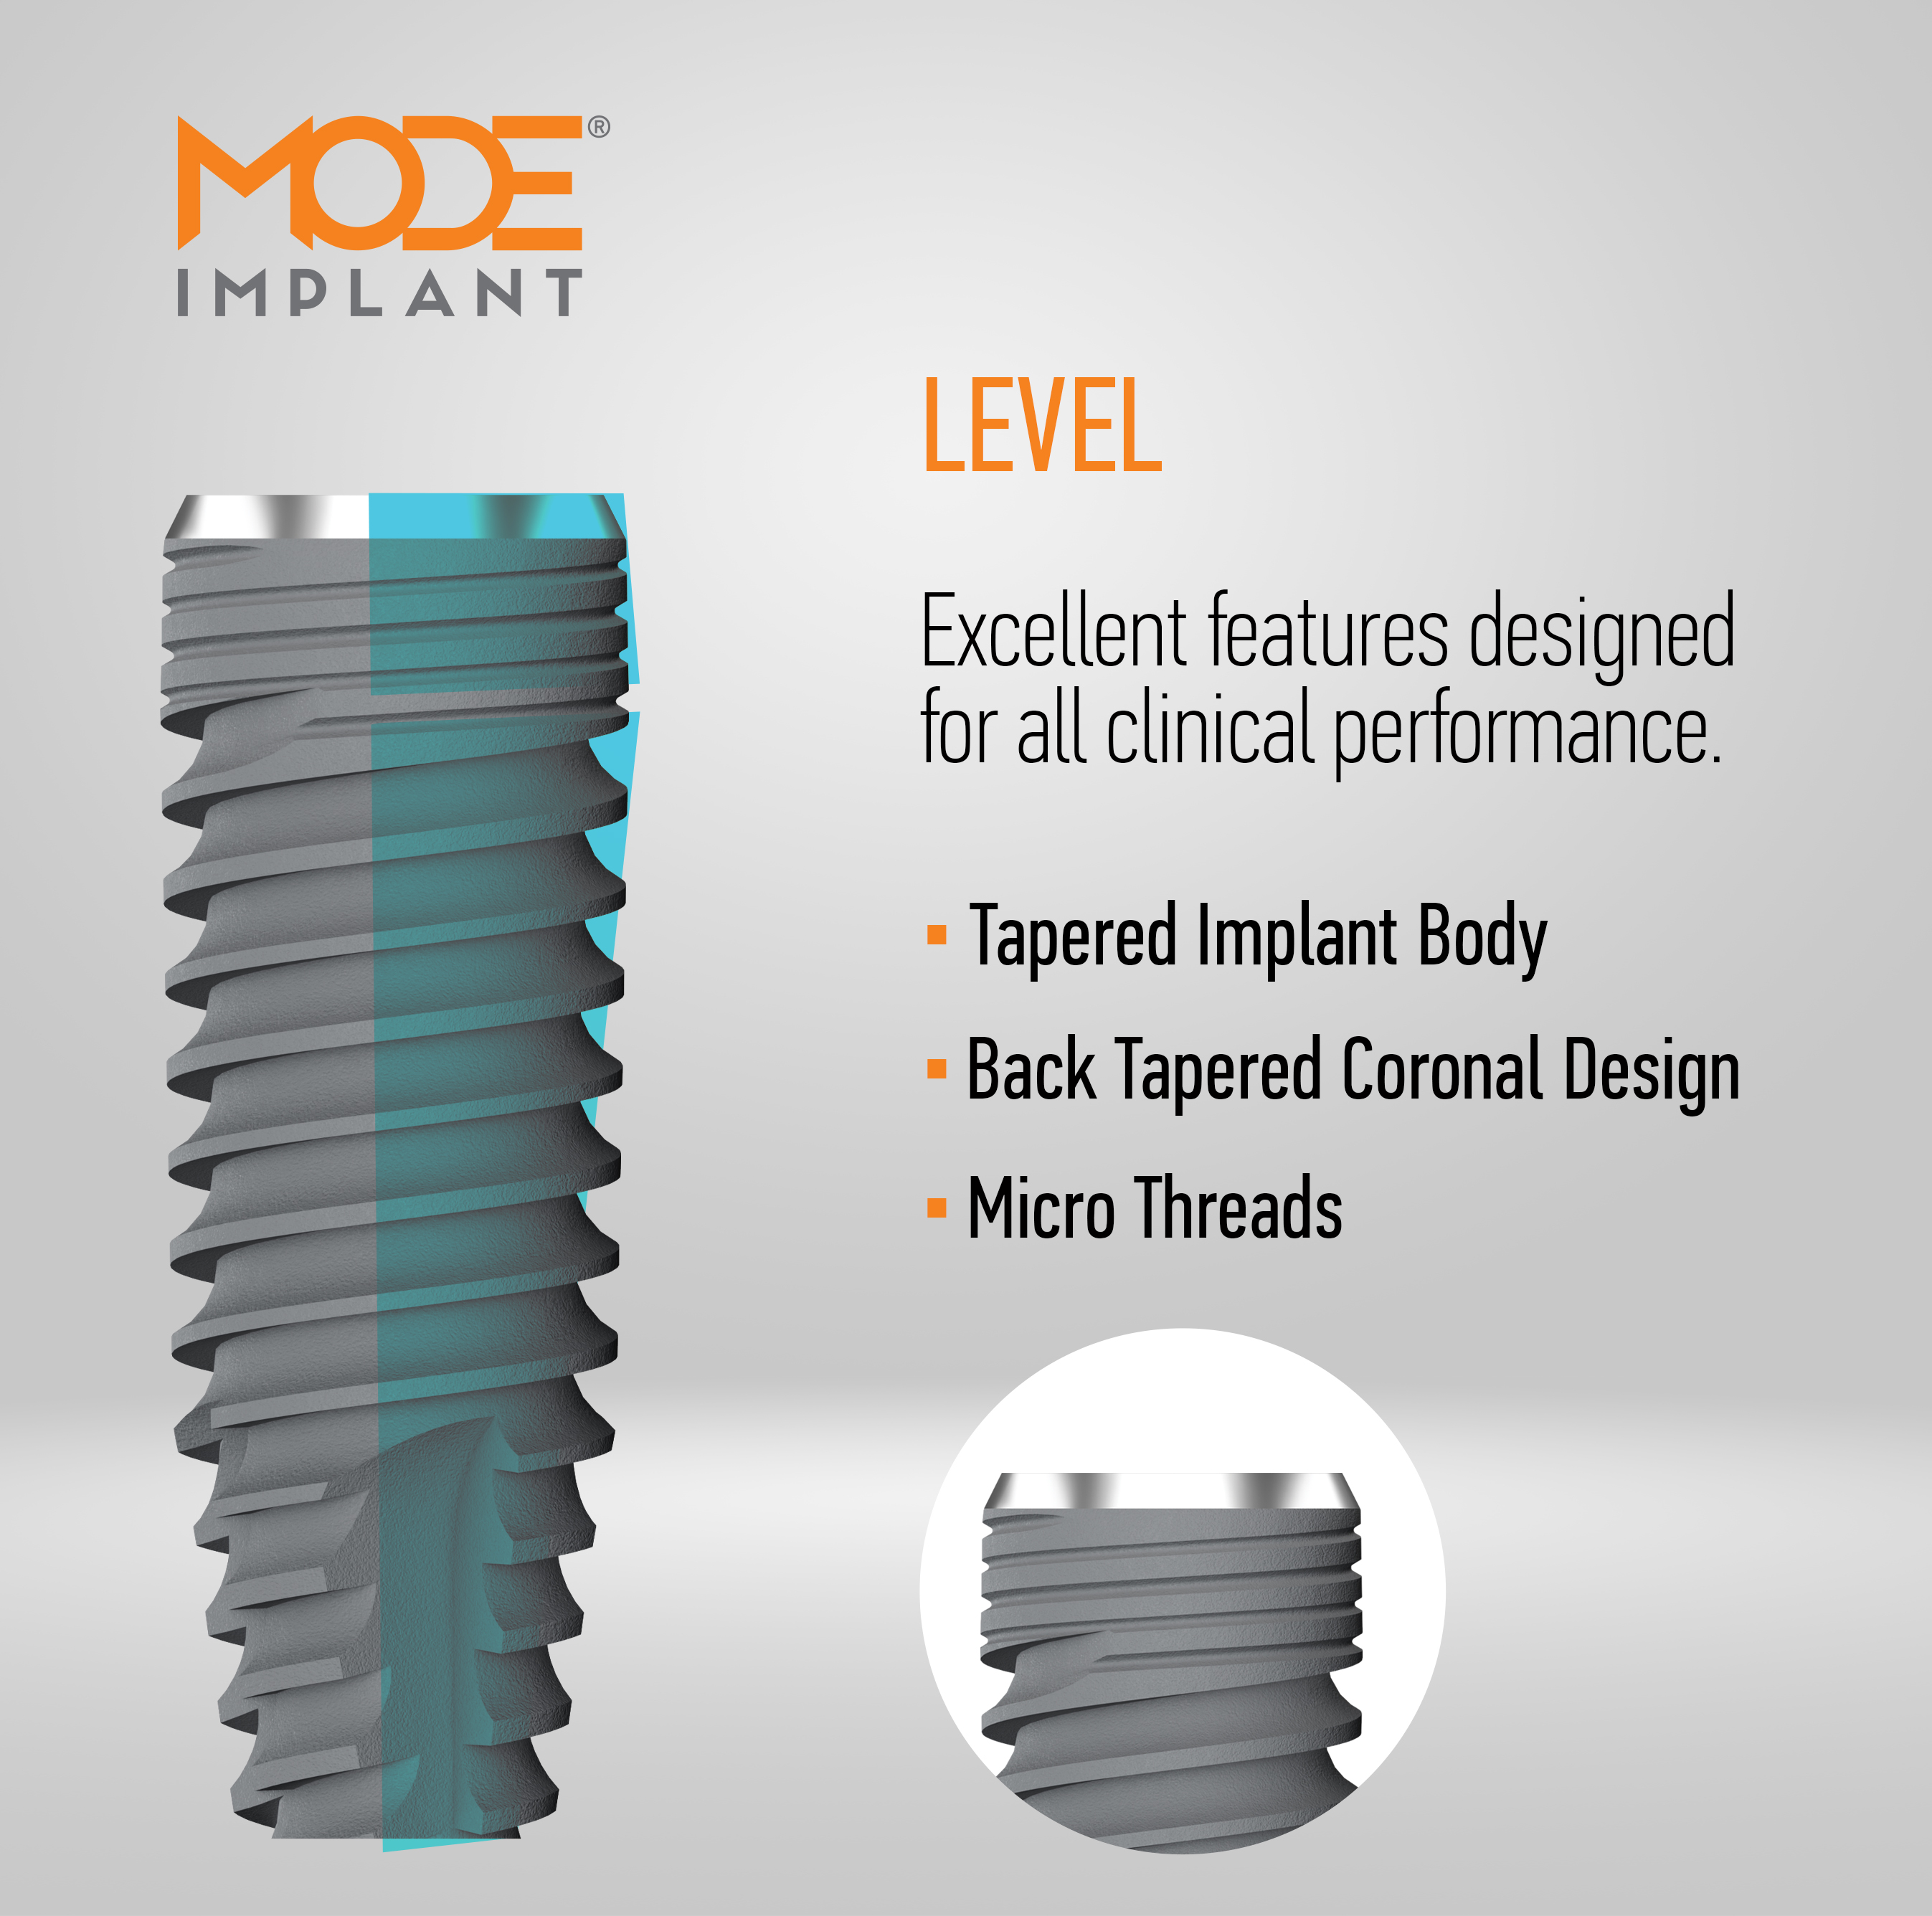 Back Tapered Coronal Design & <span>Micro Threads</span>